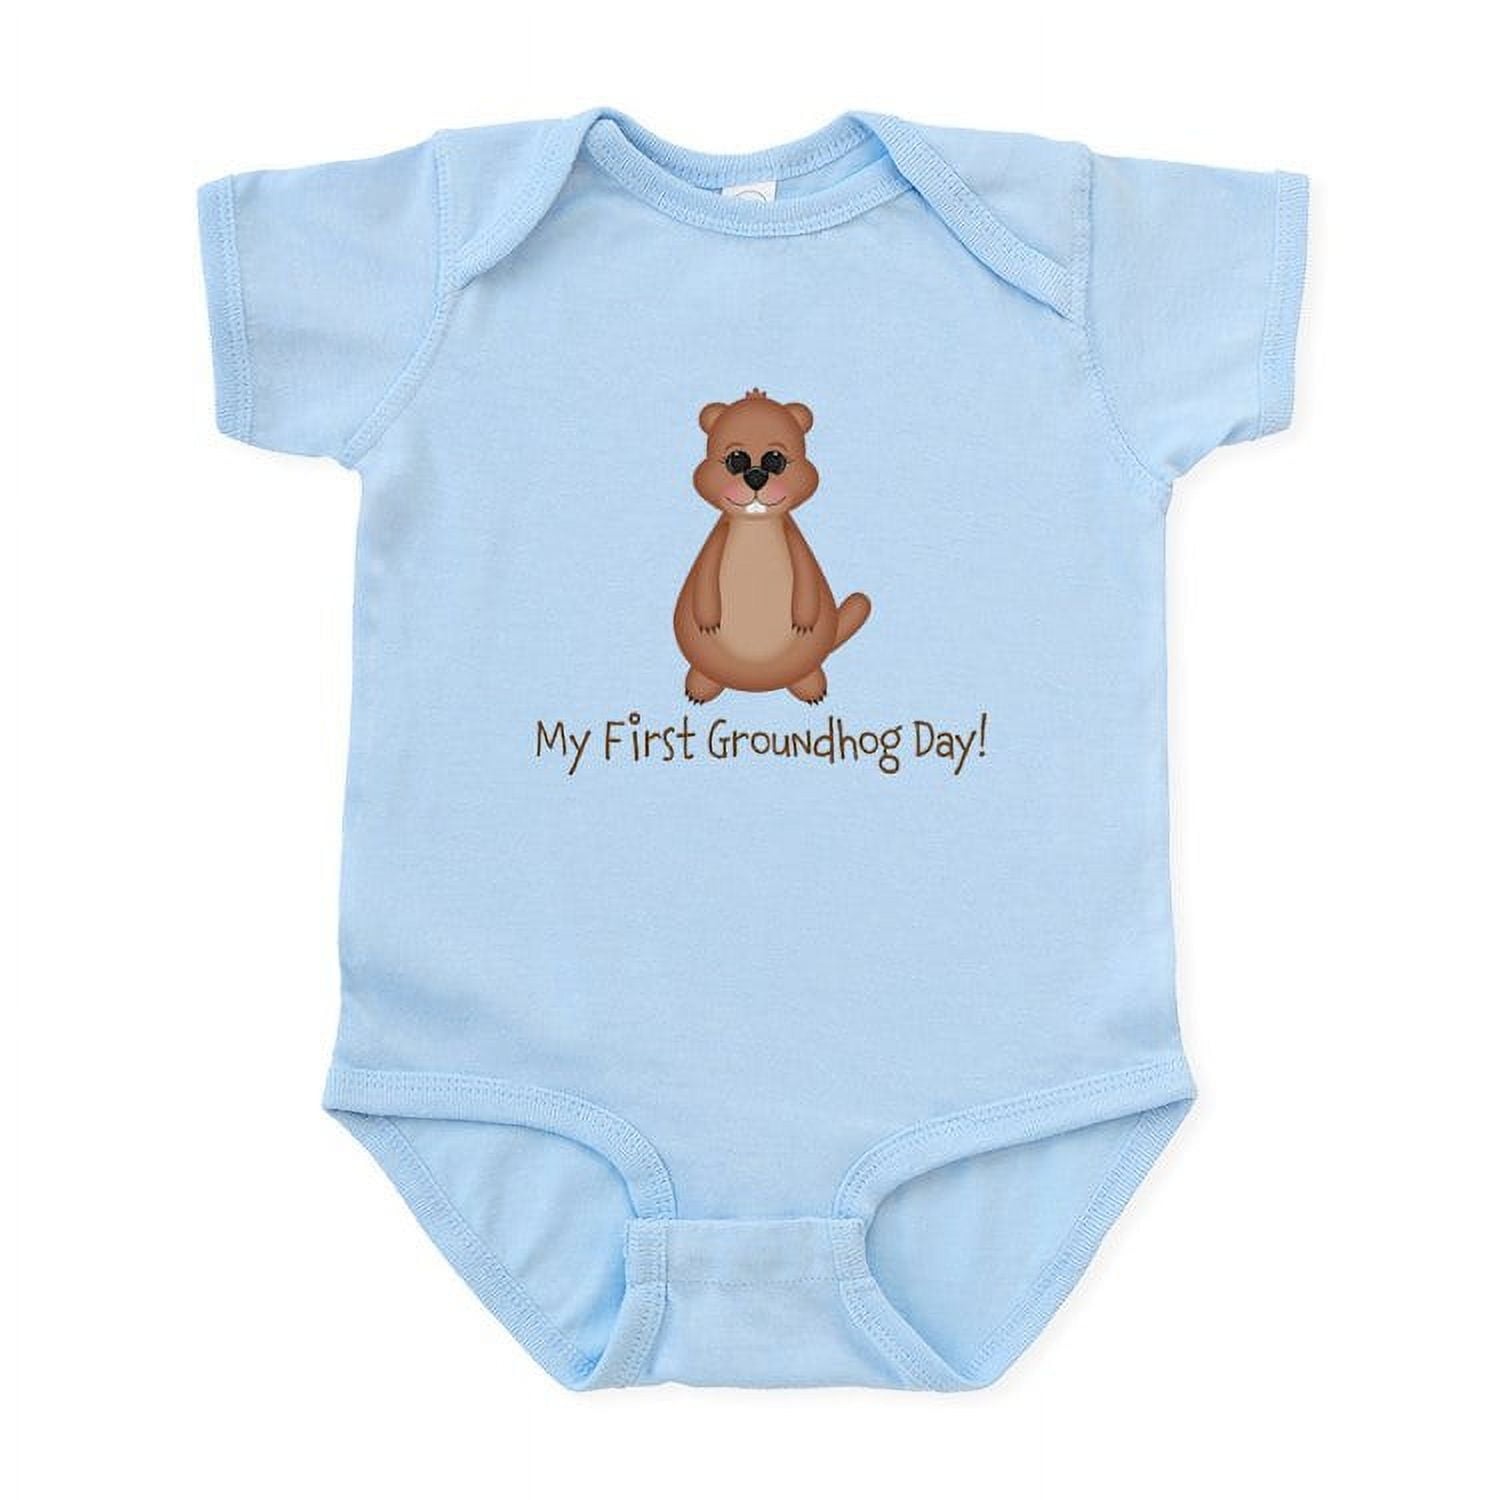 CafePress - My First Groundhog Day! Body Suit - Baby Light Bodysuit, Size  Newborn - 24 Months